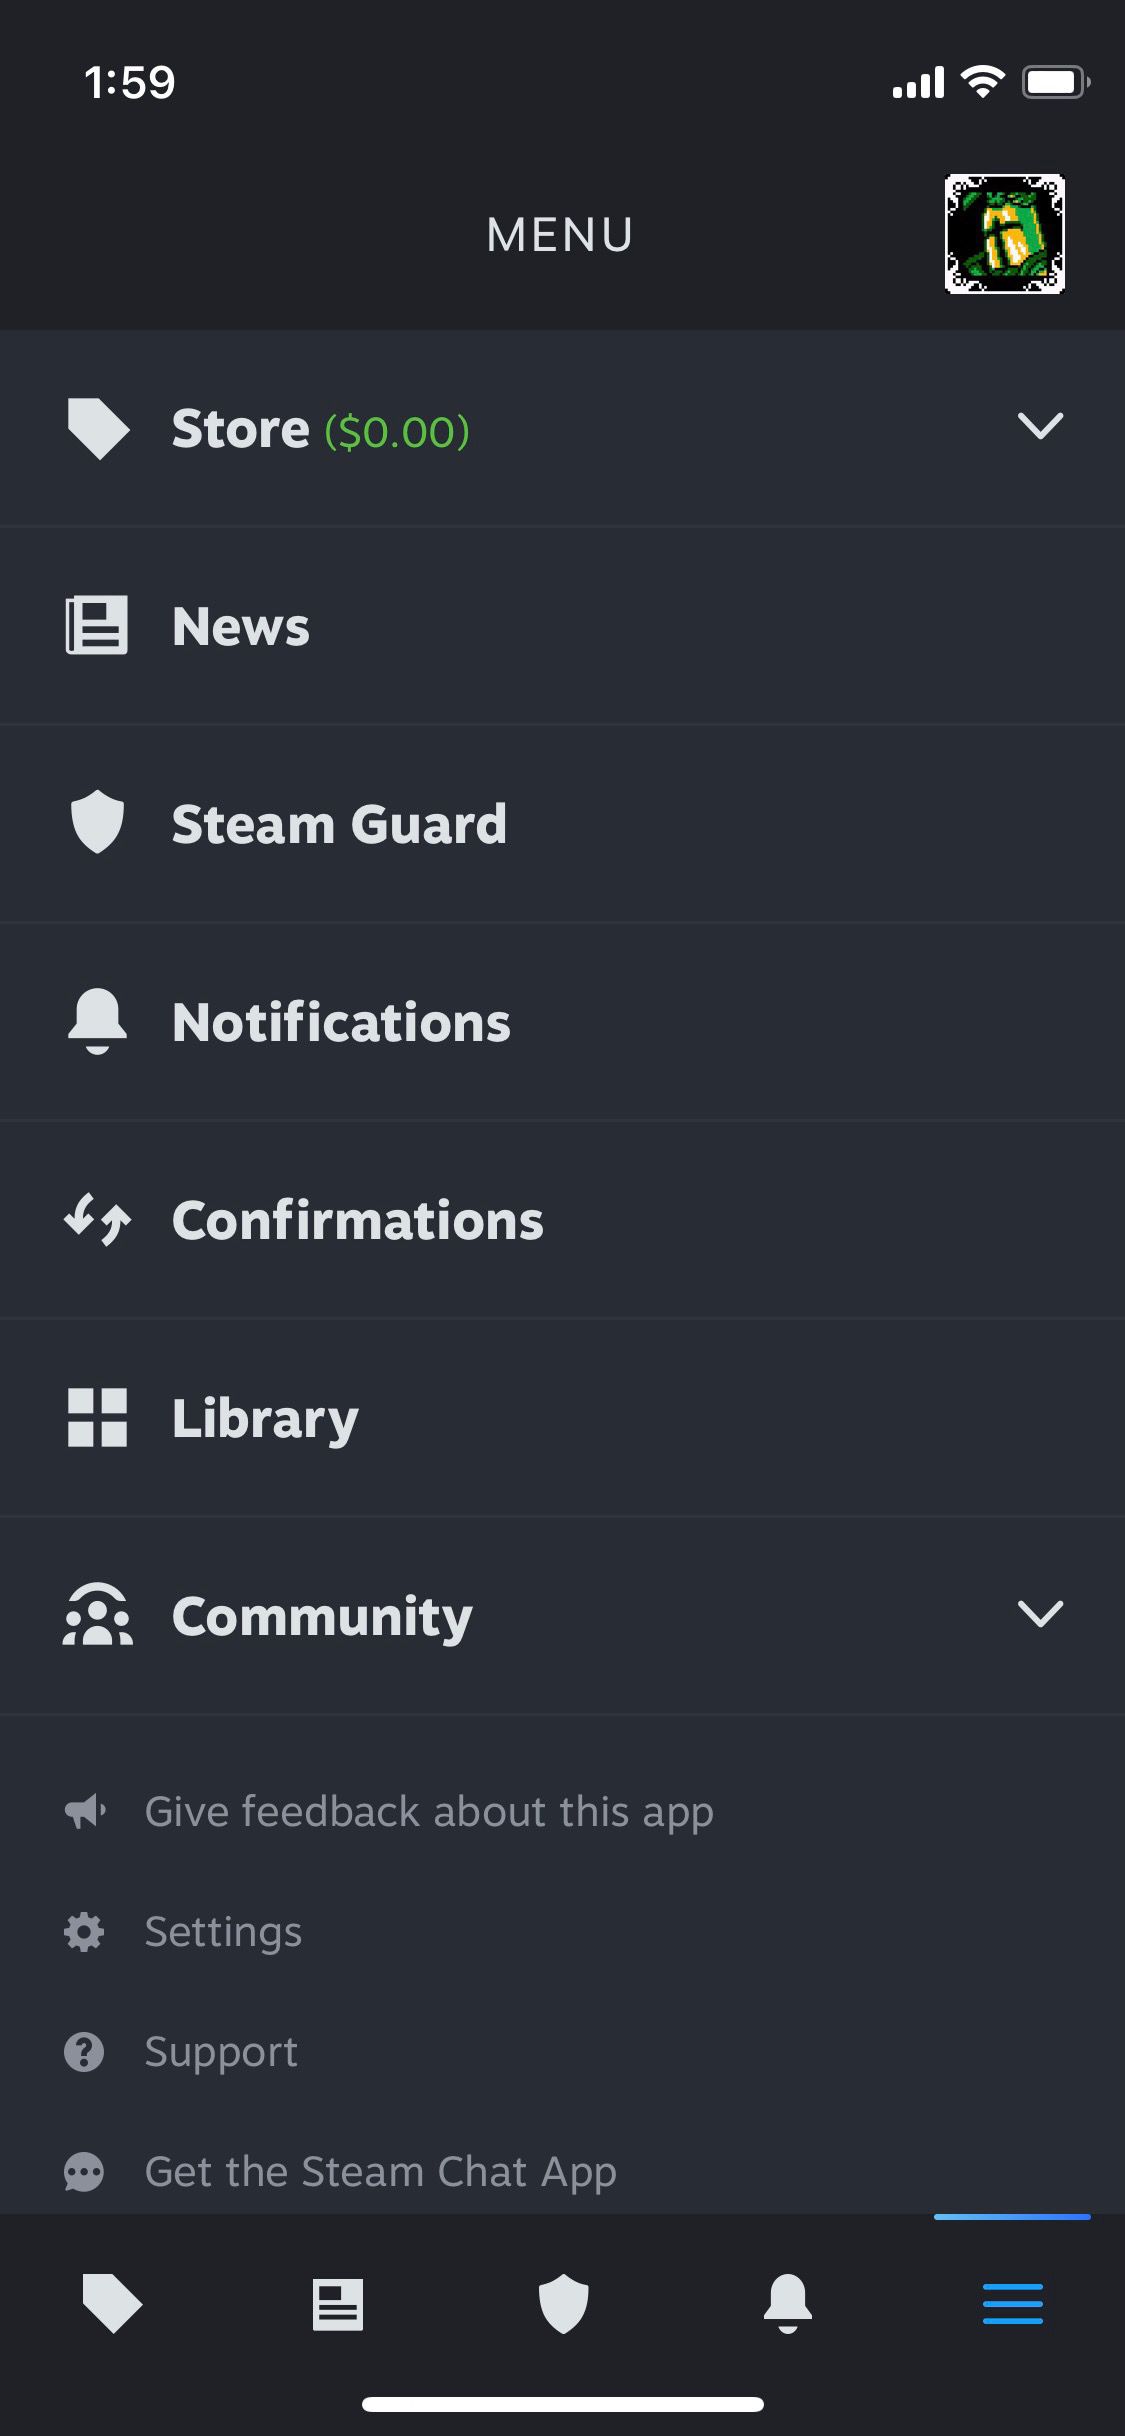 List of sub-menus in the new Steam app.